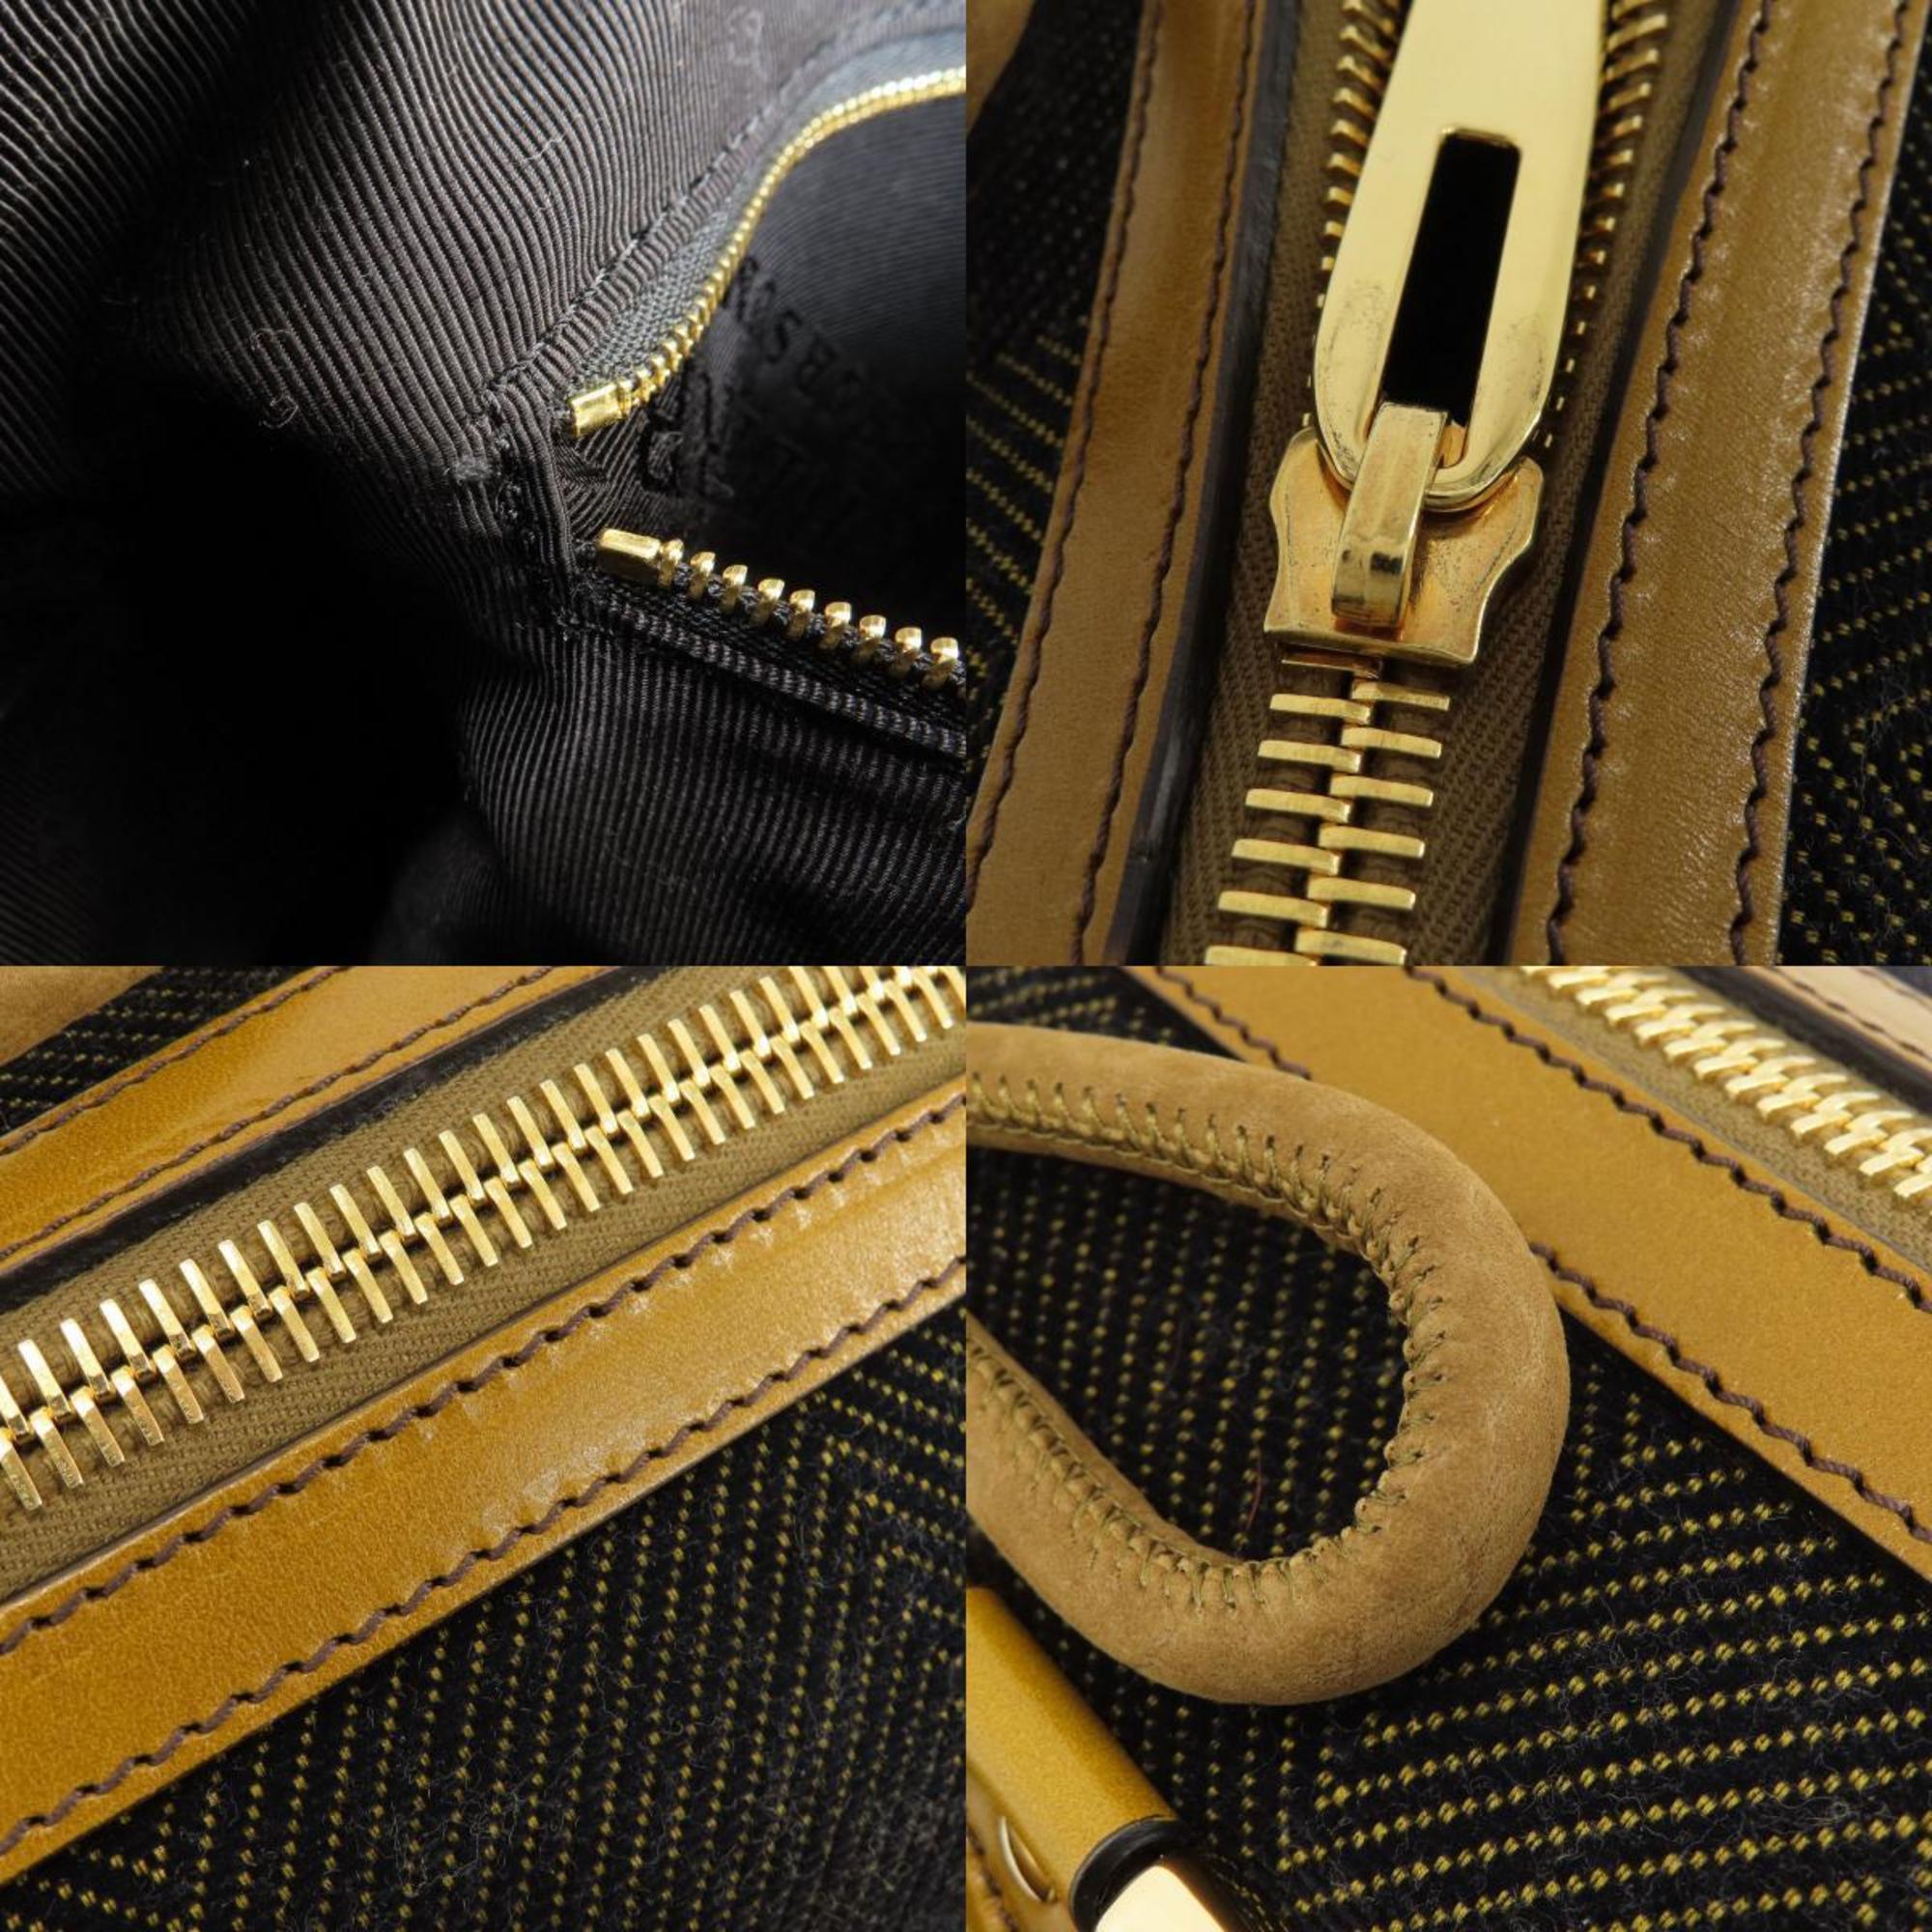 Burberry Bow Handbag Leather/Canvas Women's BURBERRY